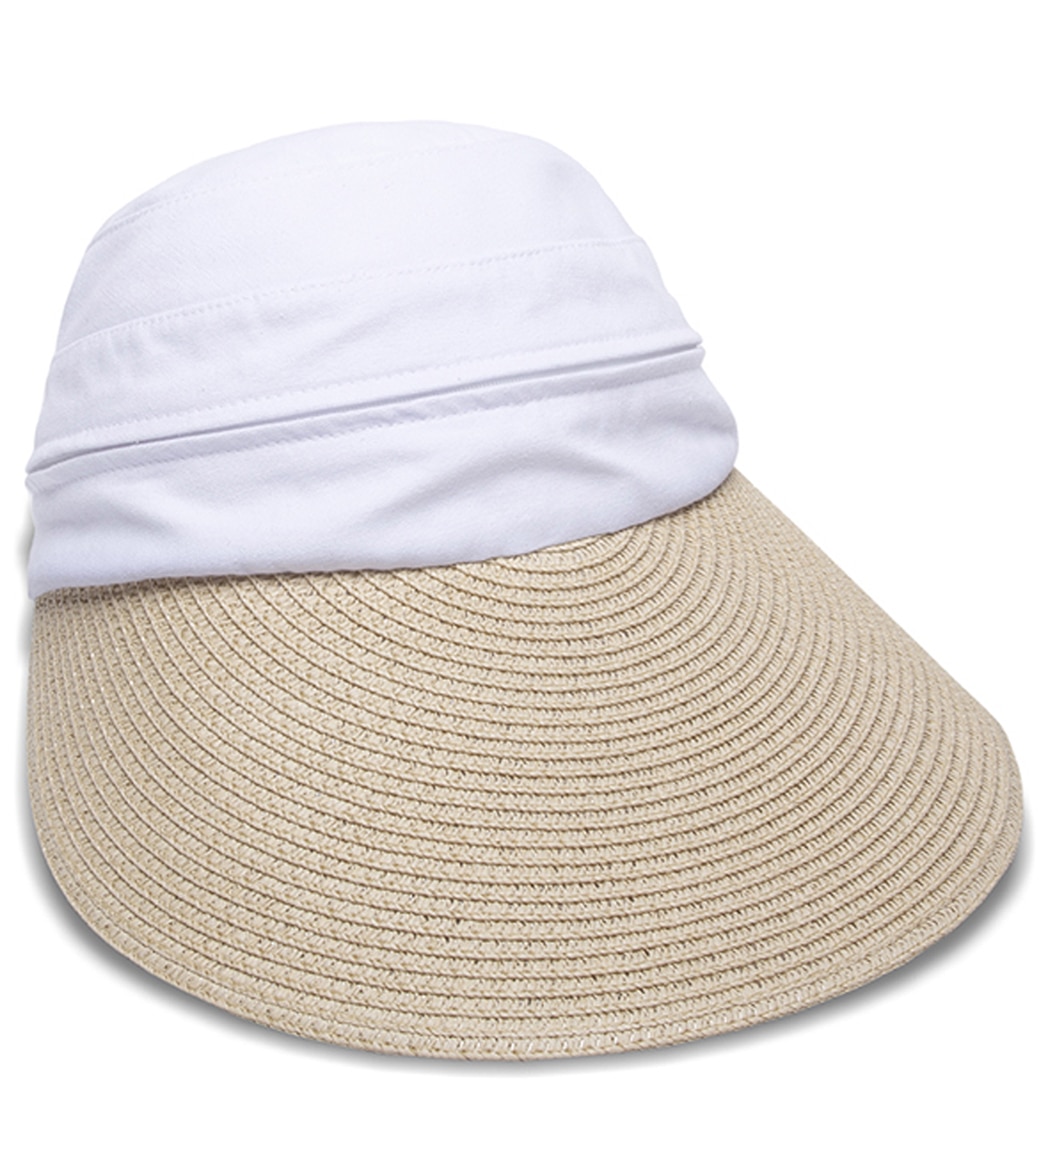 Physician Endorsed Women's Bimini Hat - Natural/White Adjustable Cotton - Swimoutlet.com